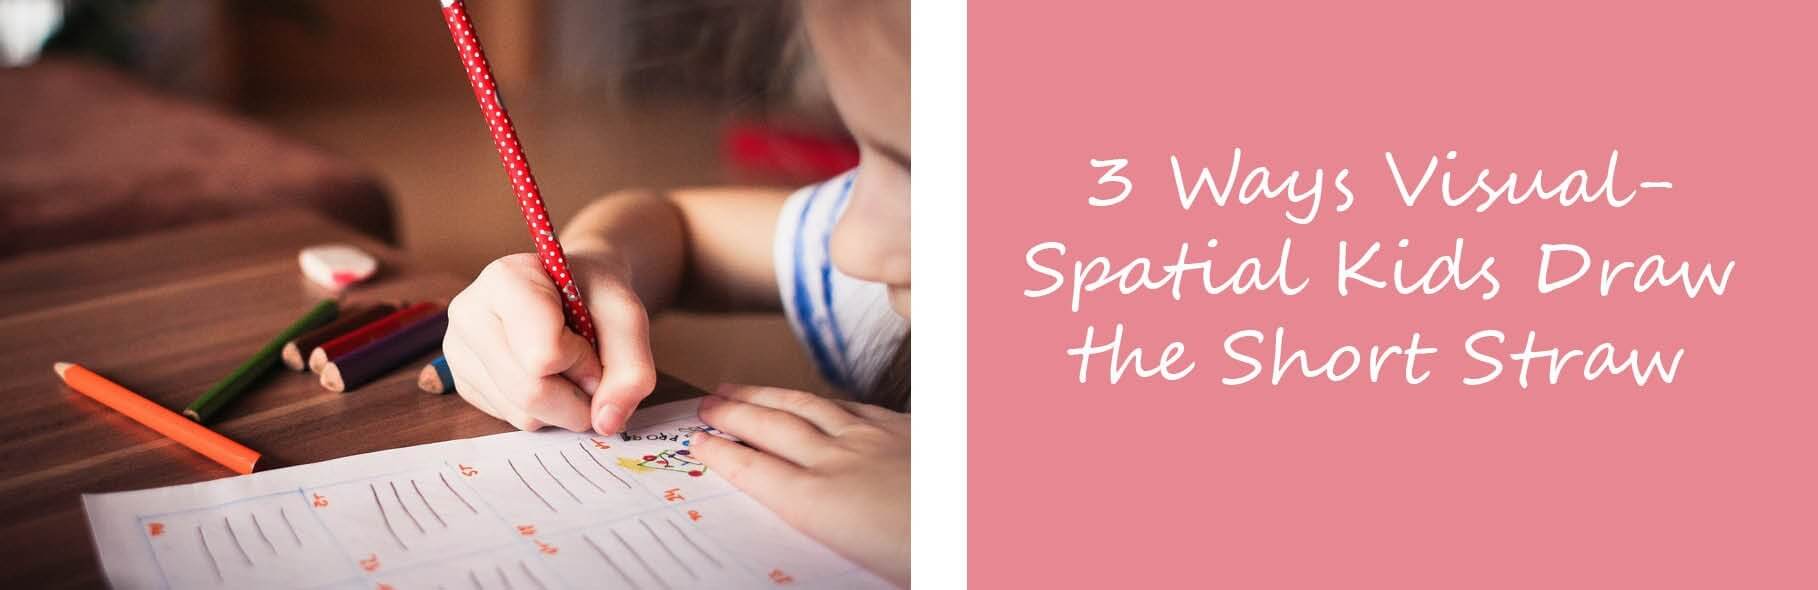 3 Ways Visual-Spatial Kids Draw the Short Straw